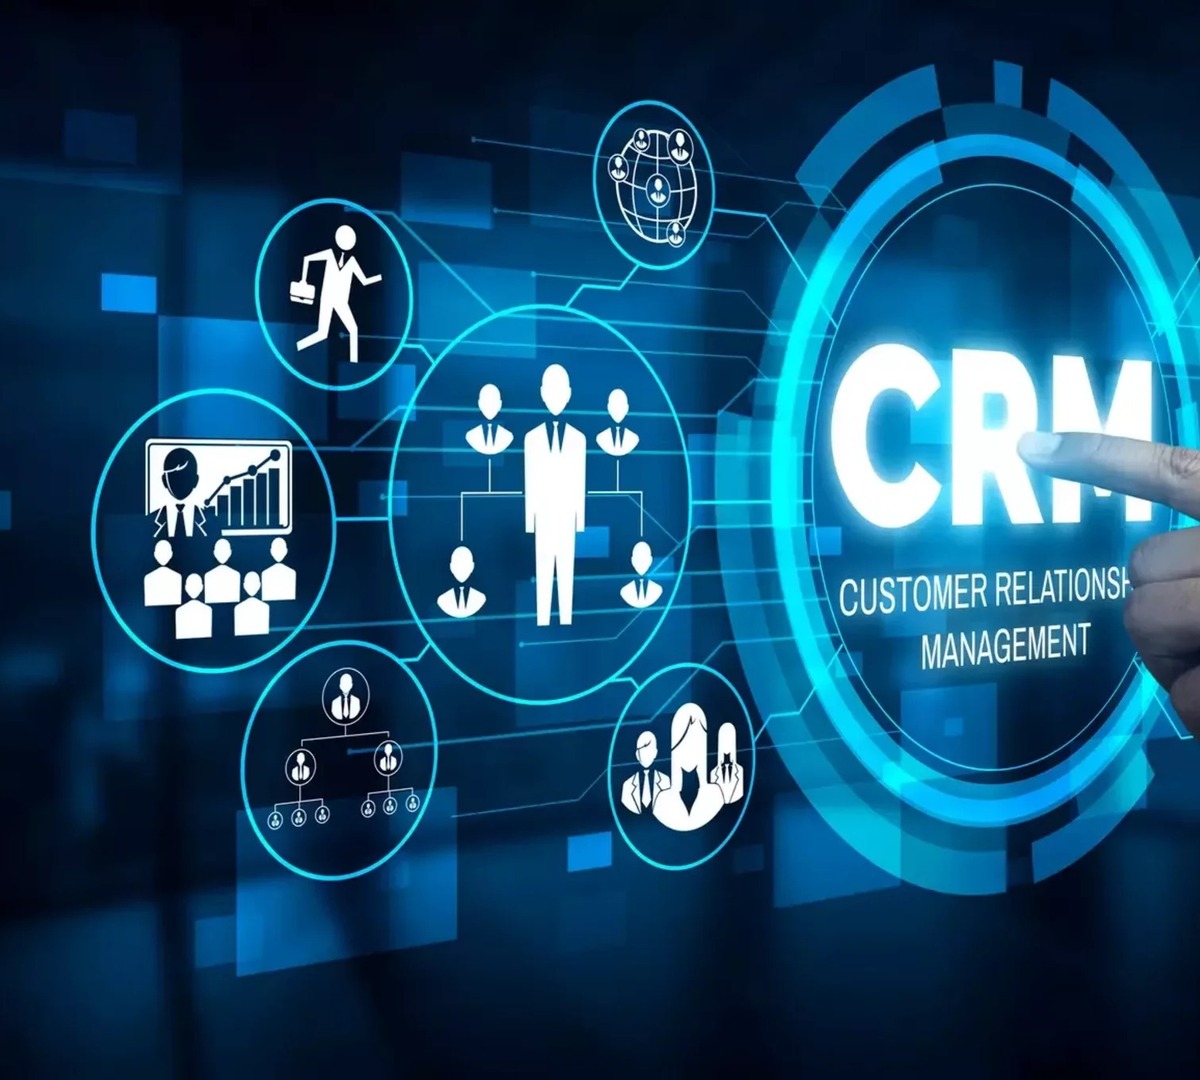 CRM image